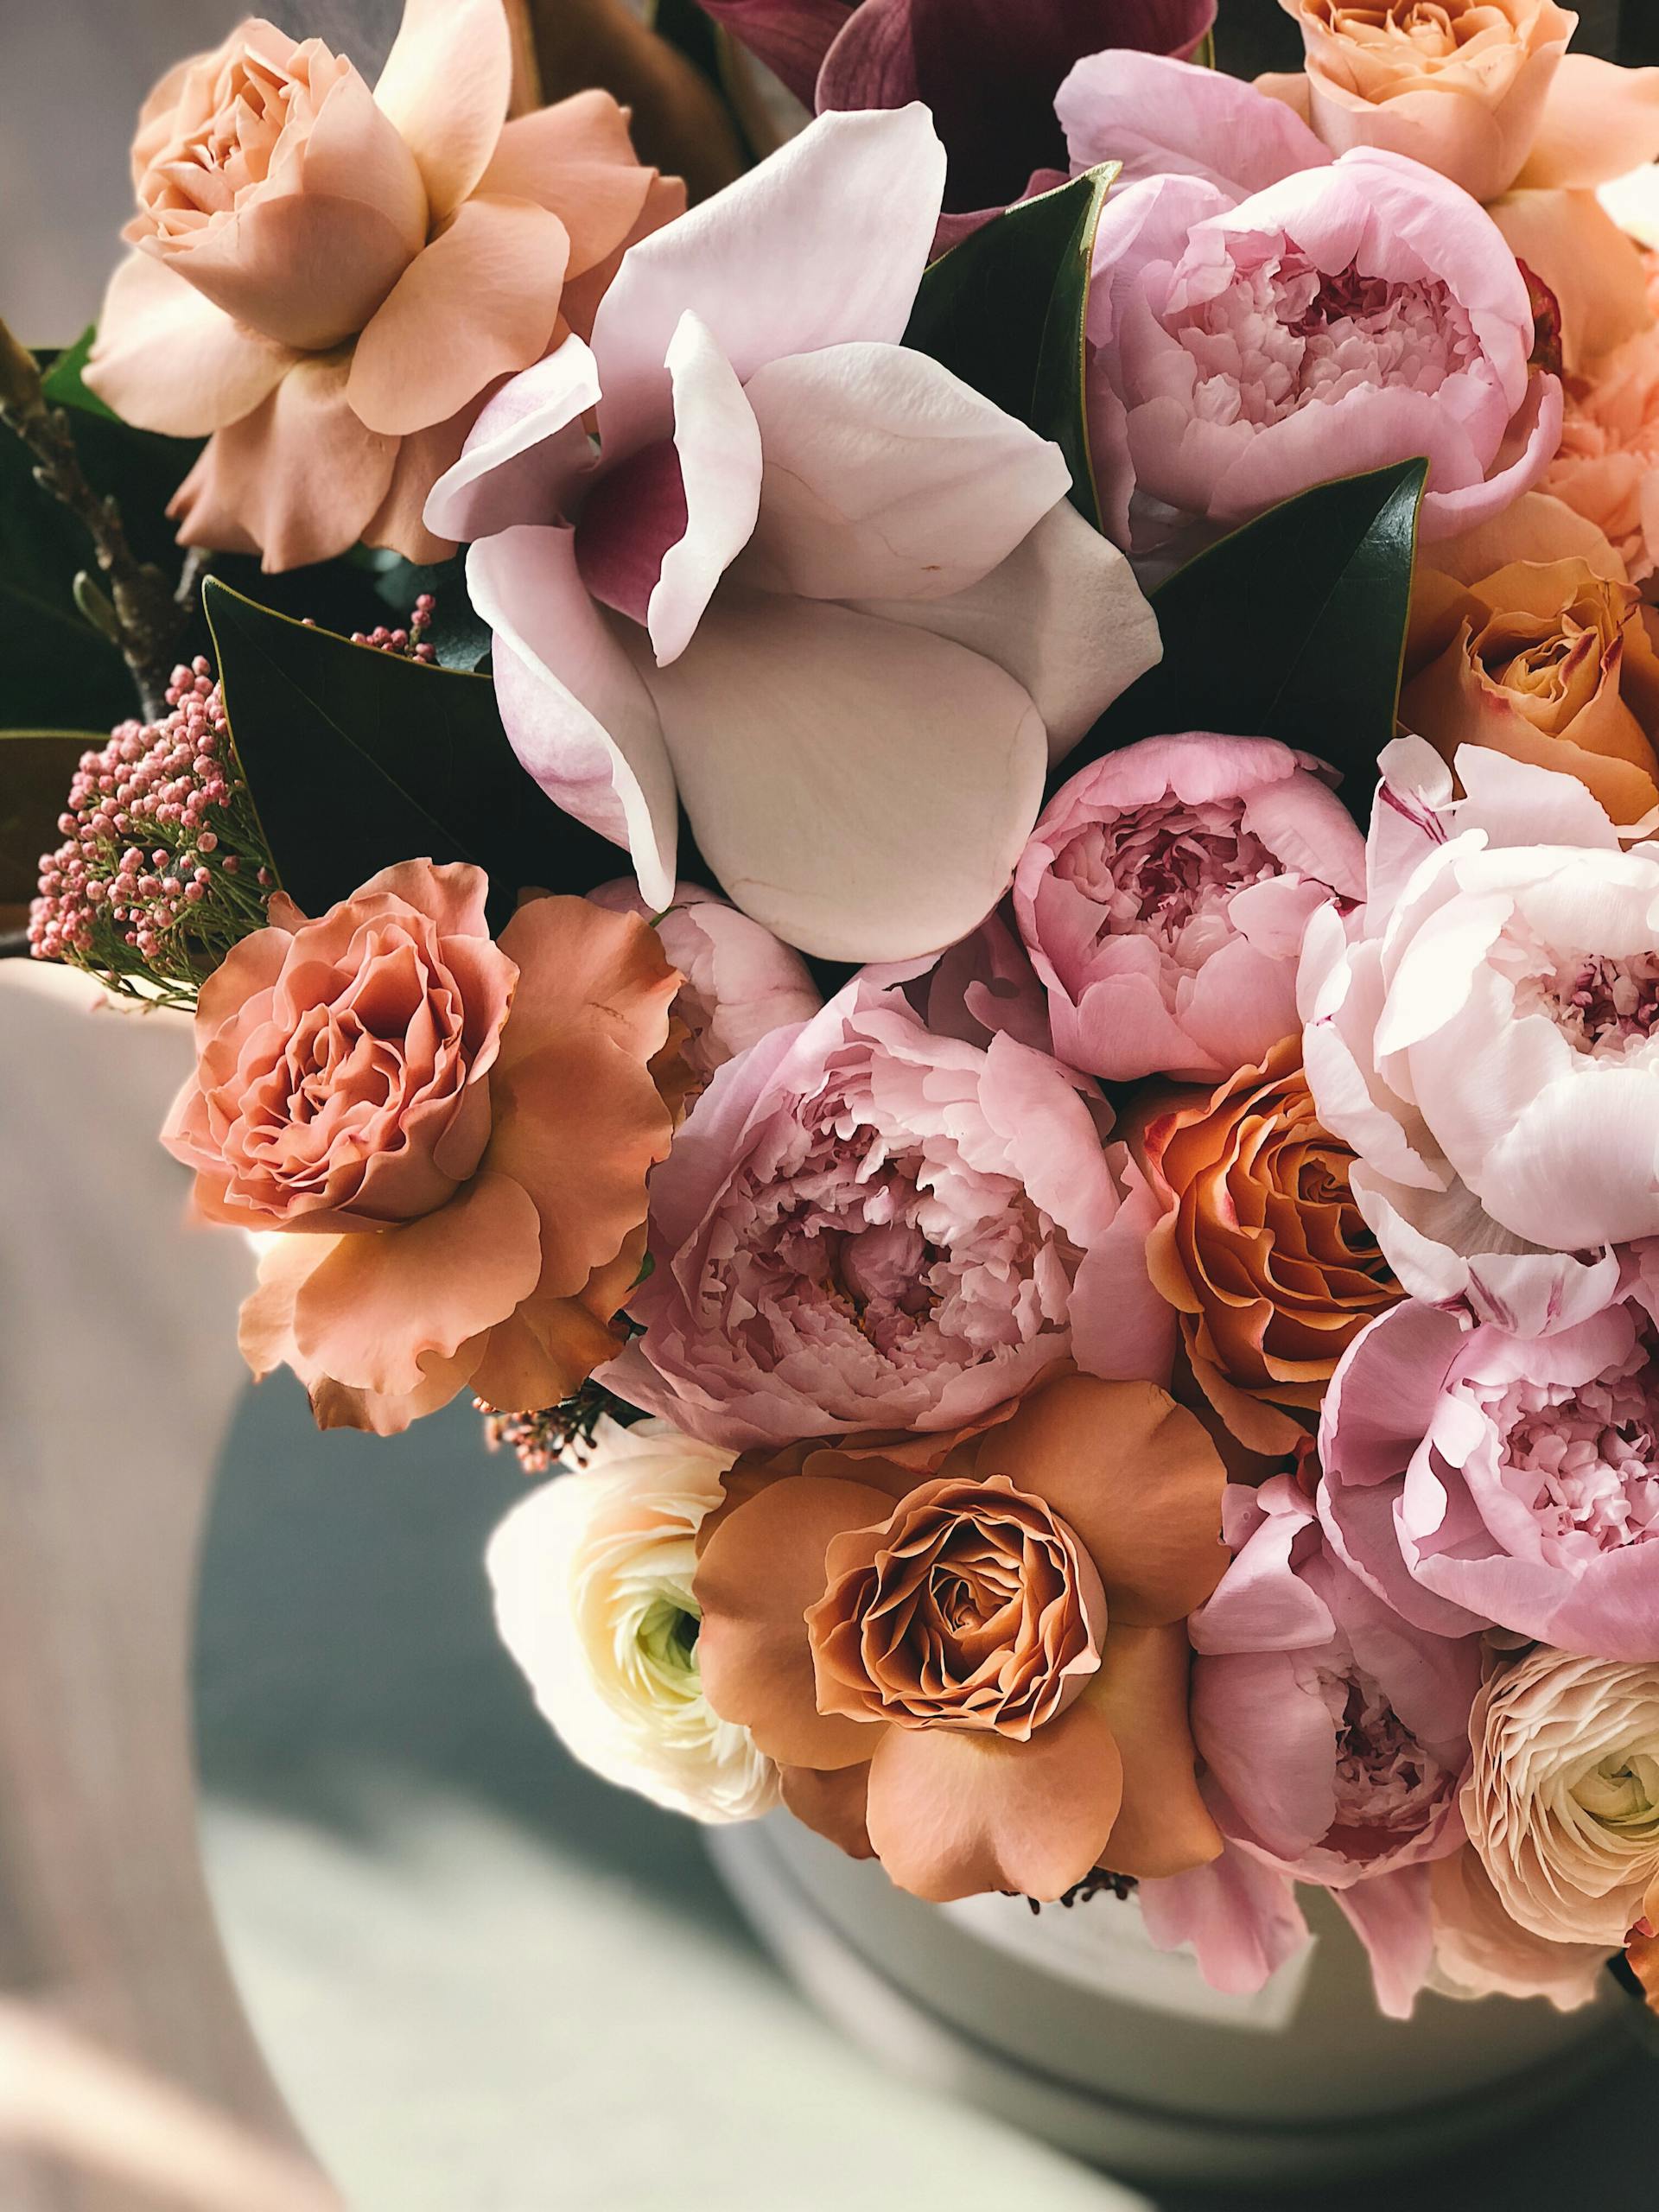 Floral arrangement for a wedding | Source: Pexels